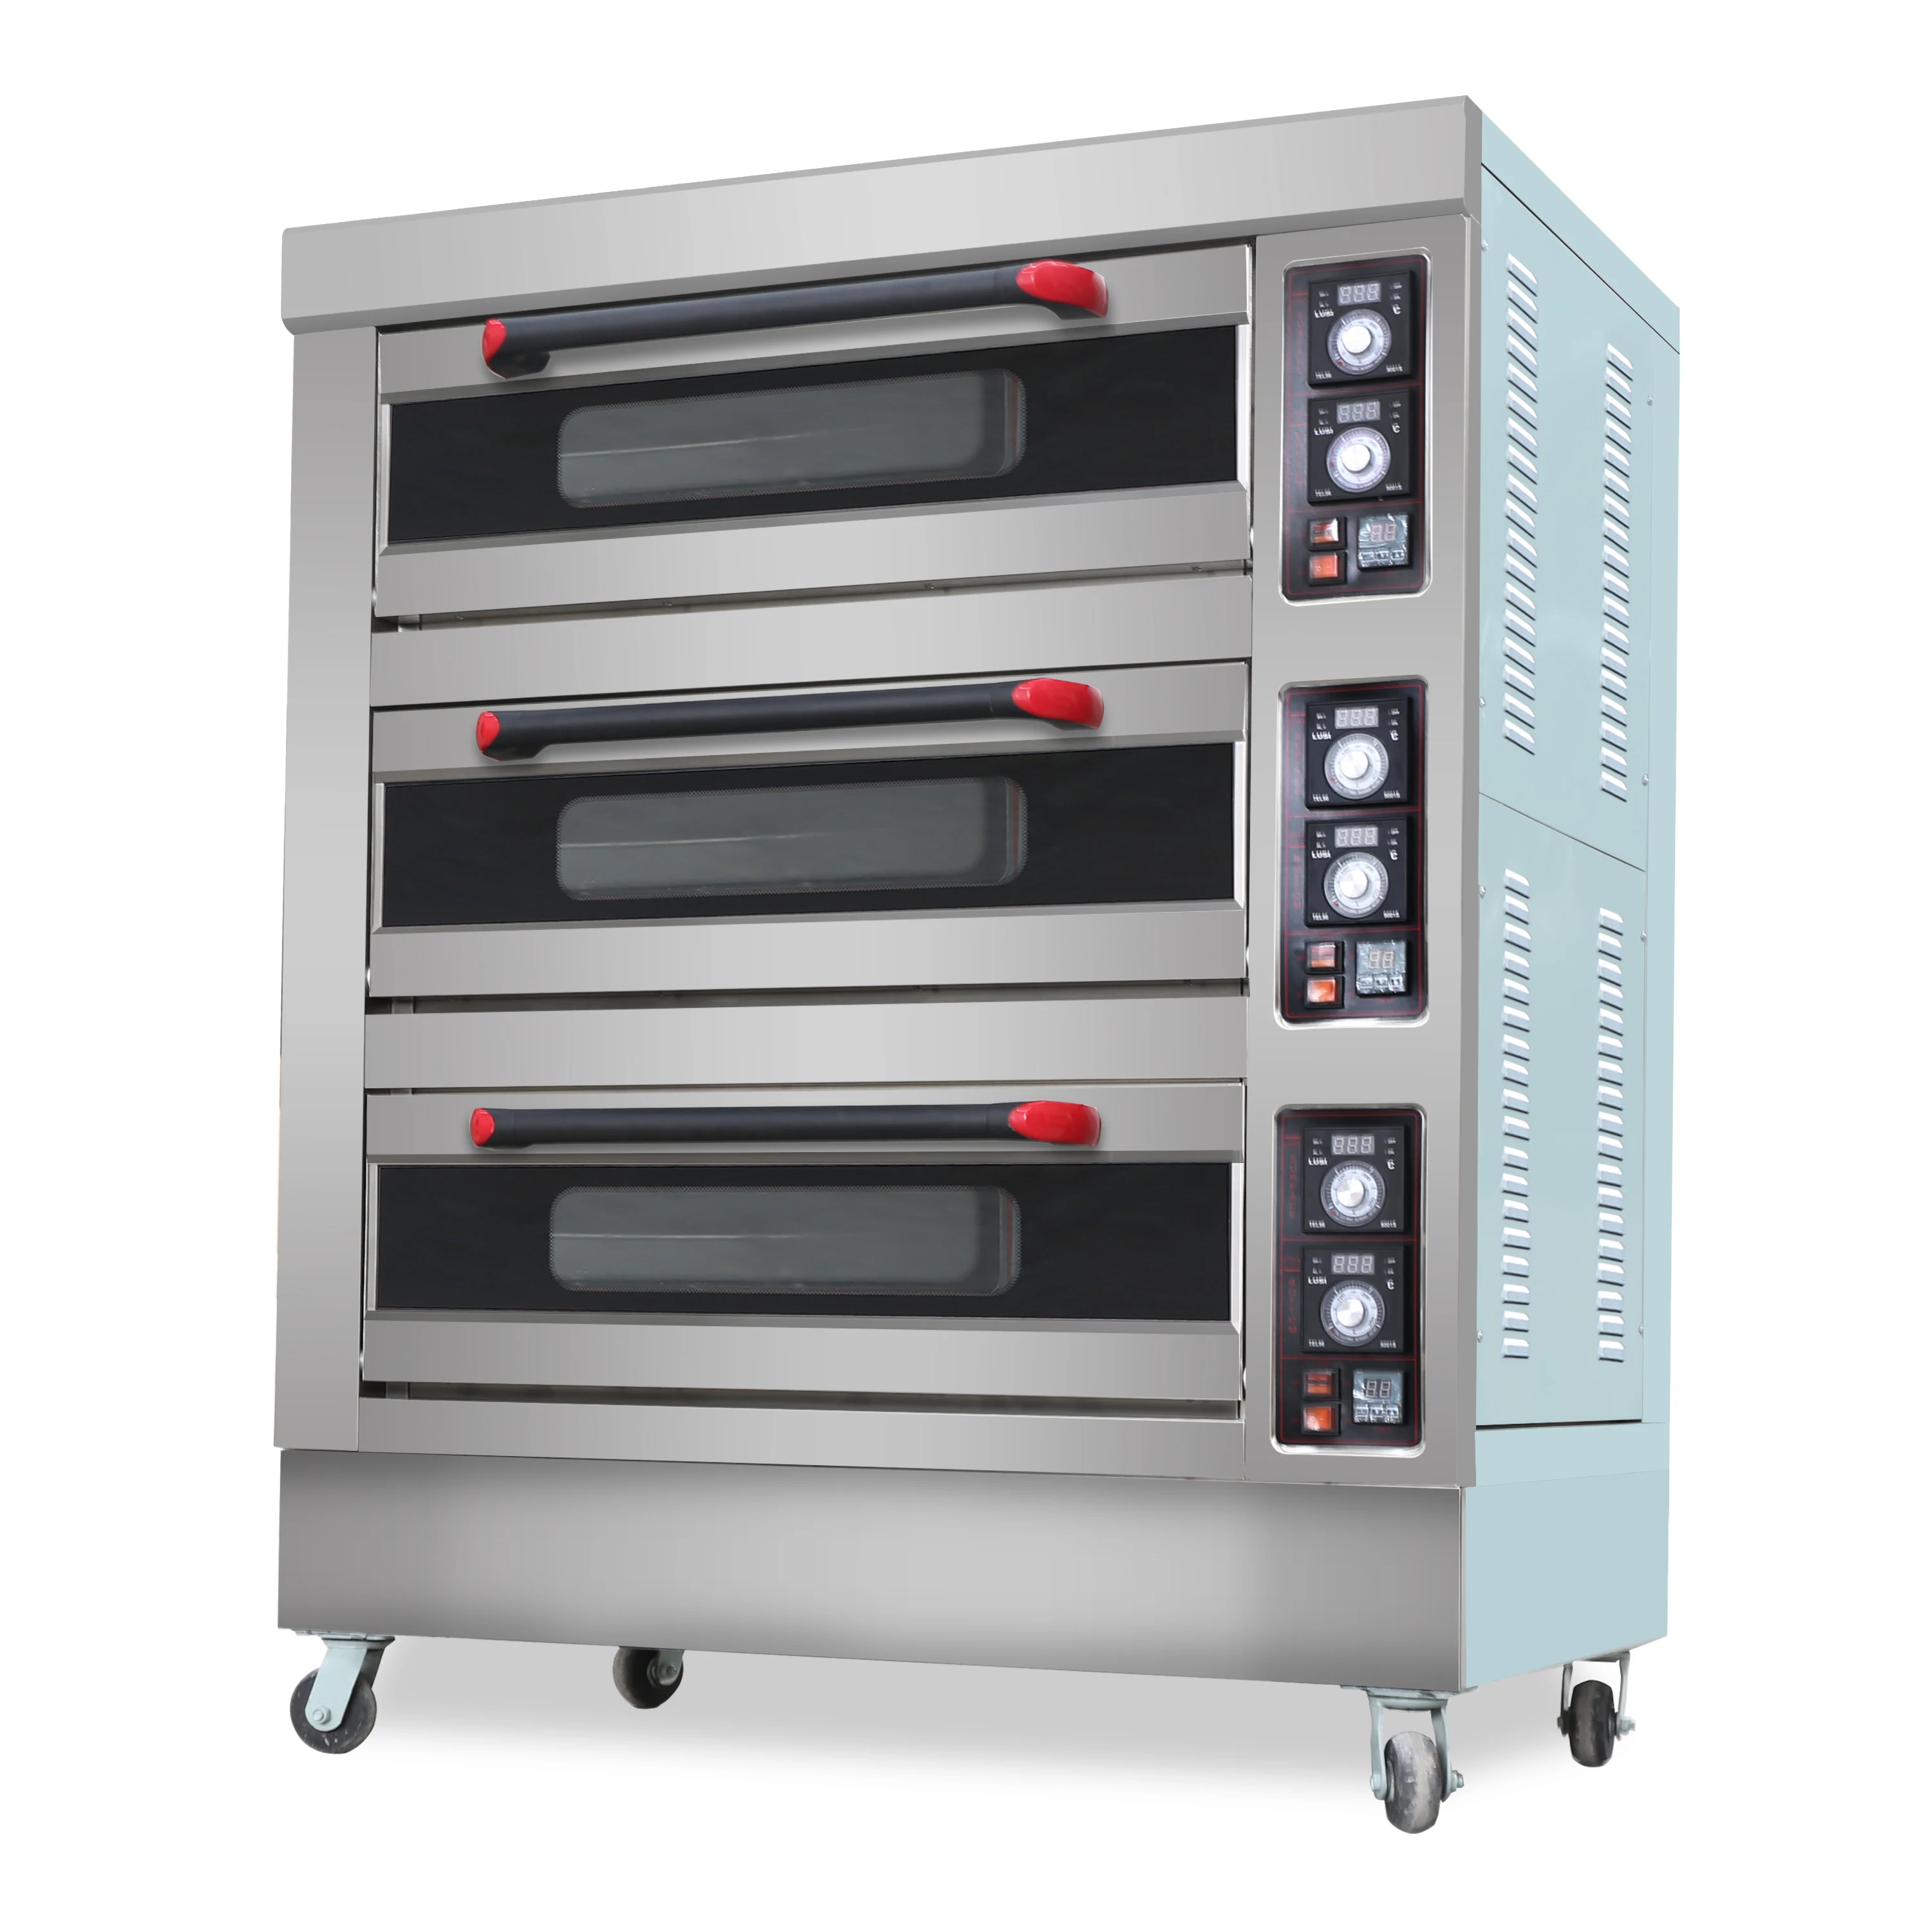 https://ae01.alicdn.com/kf/H3ff3156729ff4e719f7ad7988188dadbK/Bread-bakery-equipment-3-deck-6-trays-electric-baking-oven-gas-type-cake-cookies-baker-machine.jpg